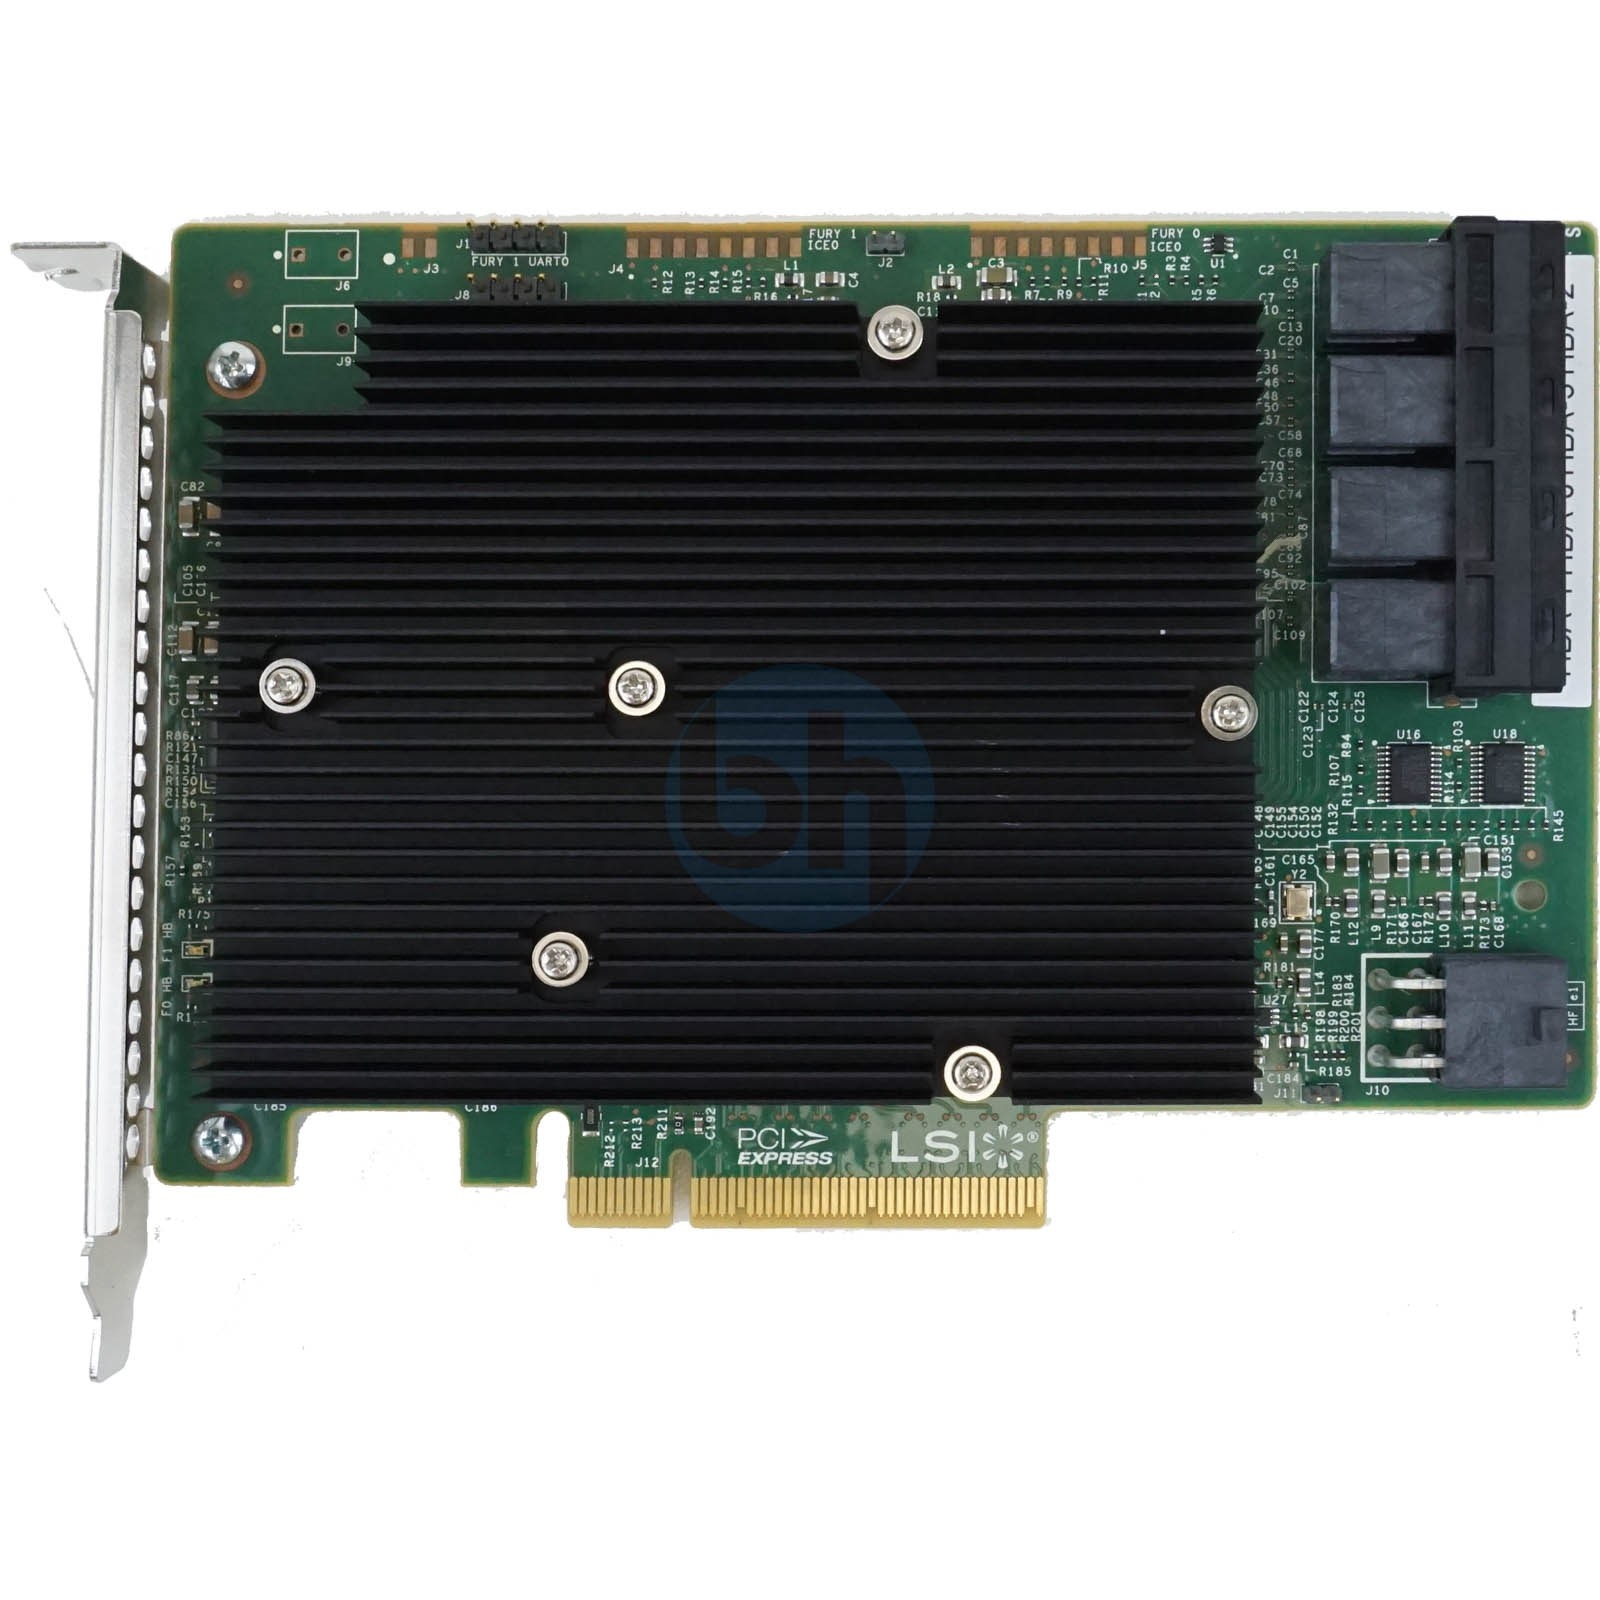 LSI MegaRAID 9300-16i FH PCIe 3.0x8 12Gbps HBA 16 Port SAS/SATA